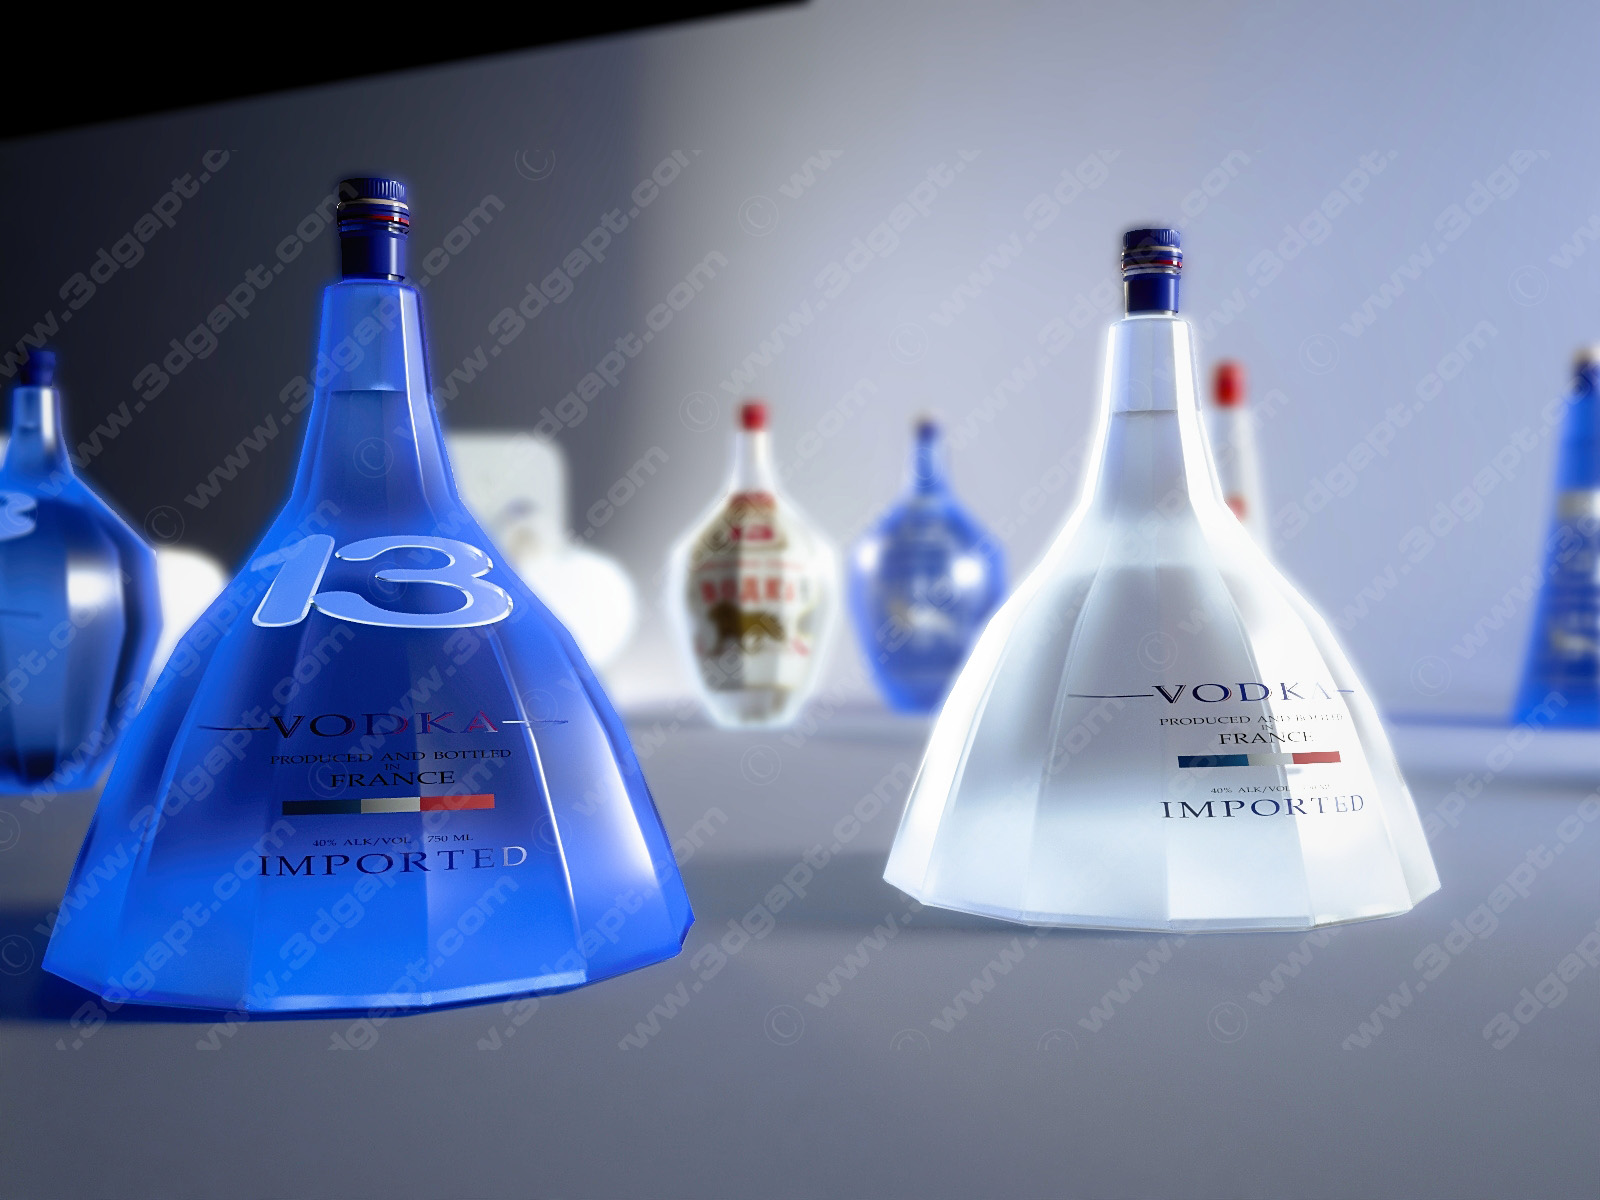 13 sided vodka bottle design